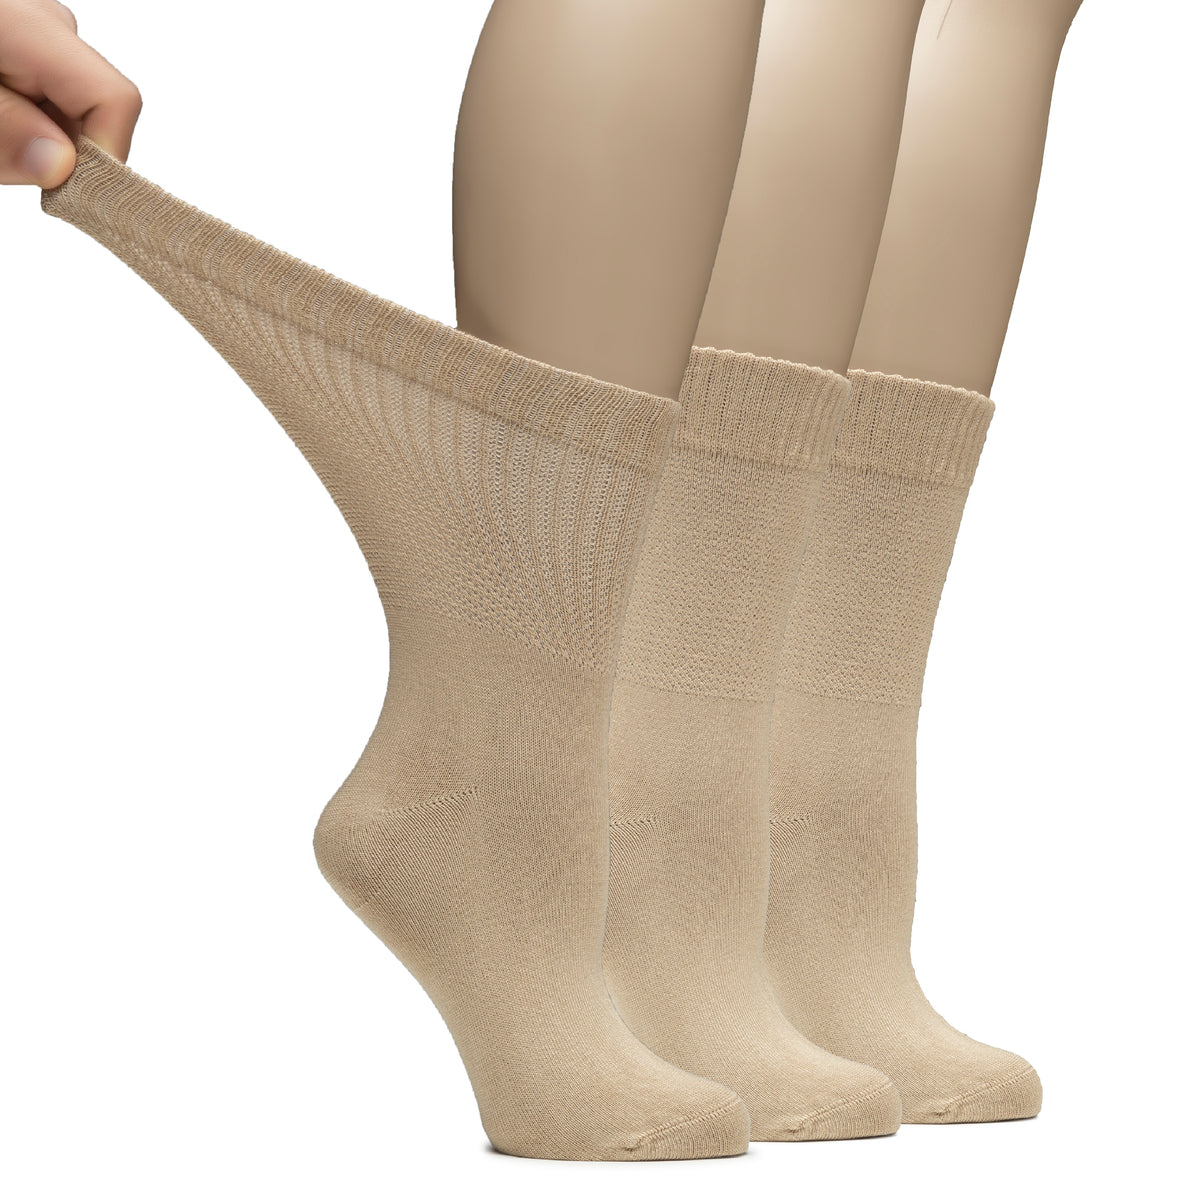 Bamboo Diabetic Crew Socks for Women, 3 Pairs